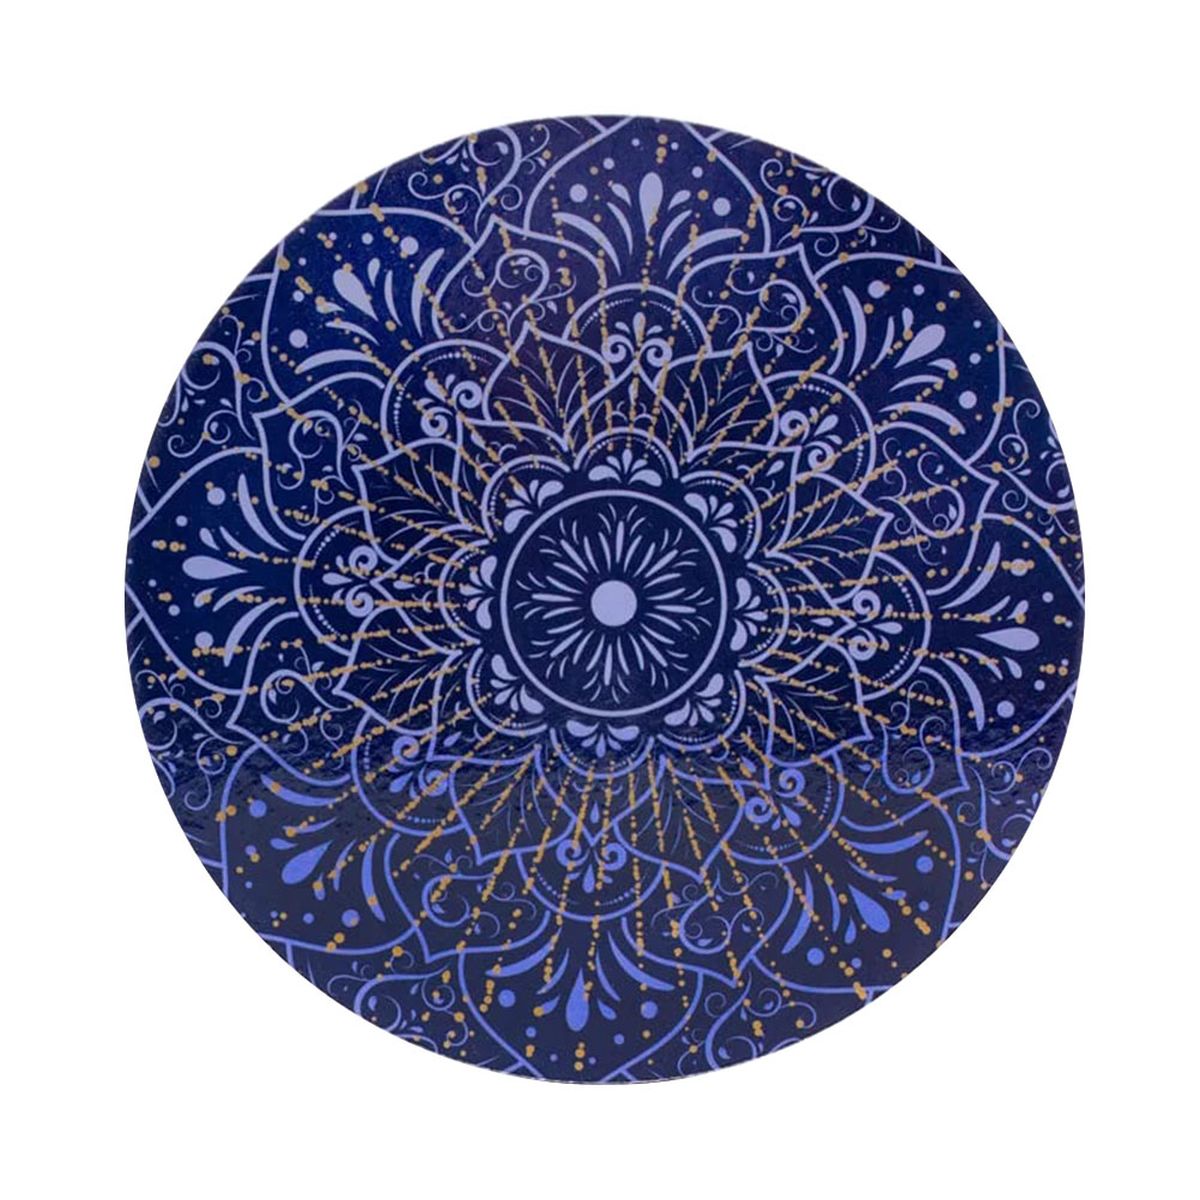 Mandala - Set of 6 coasters